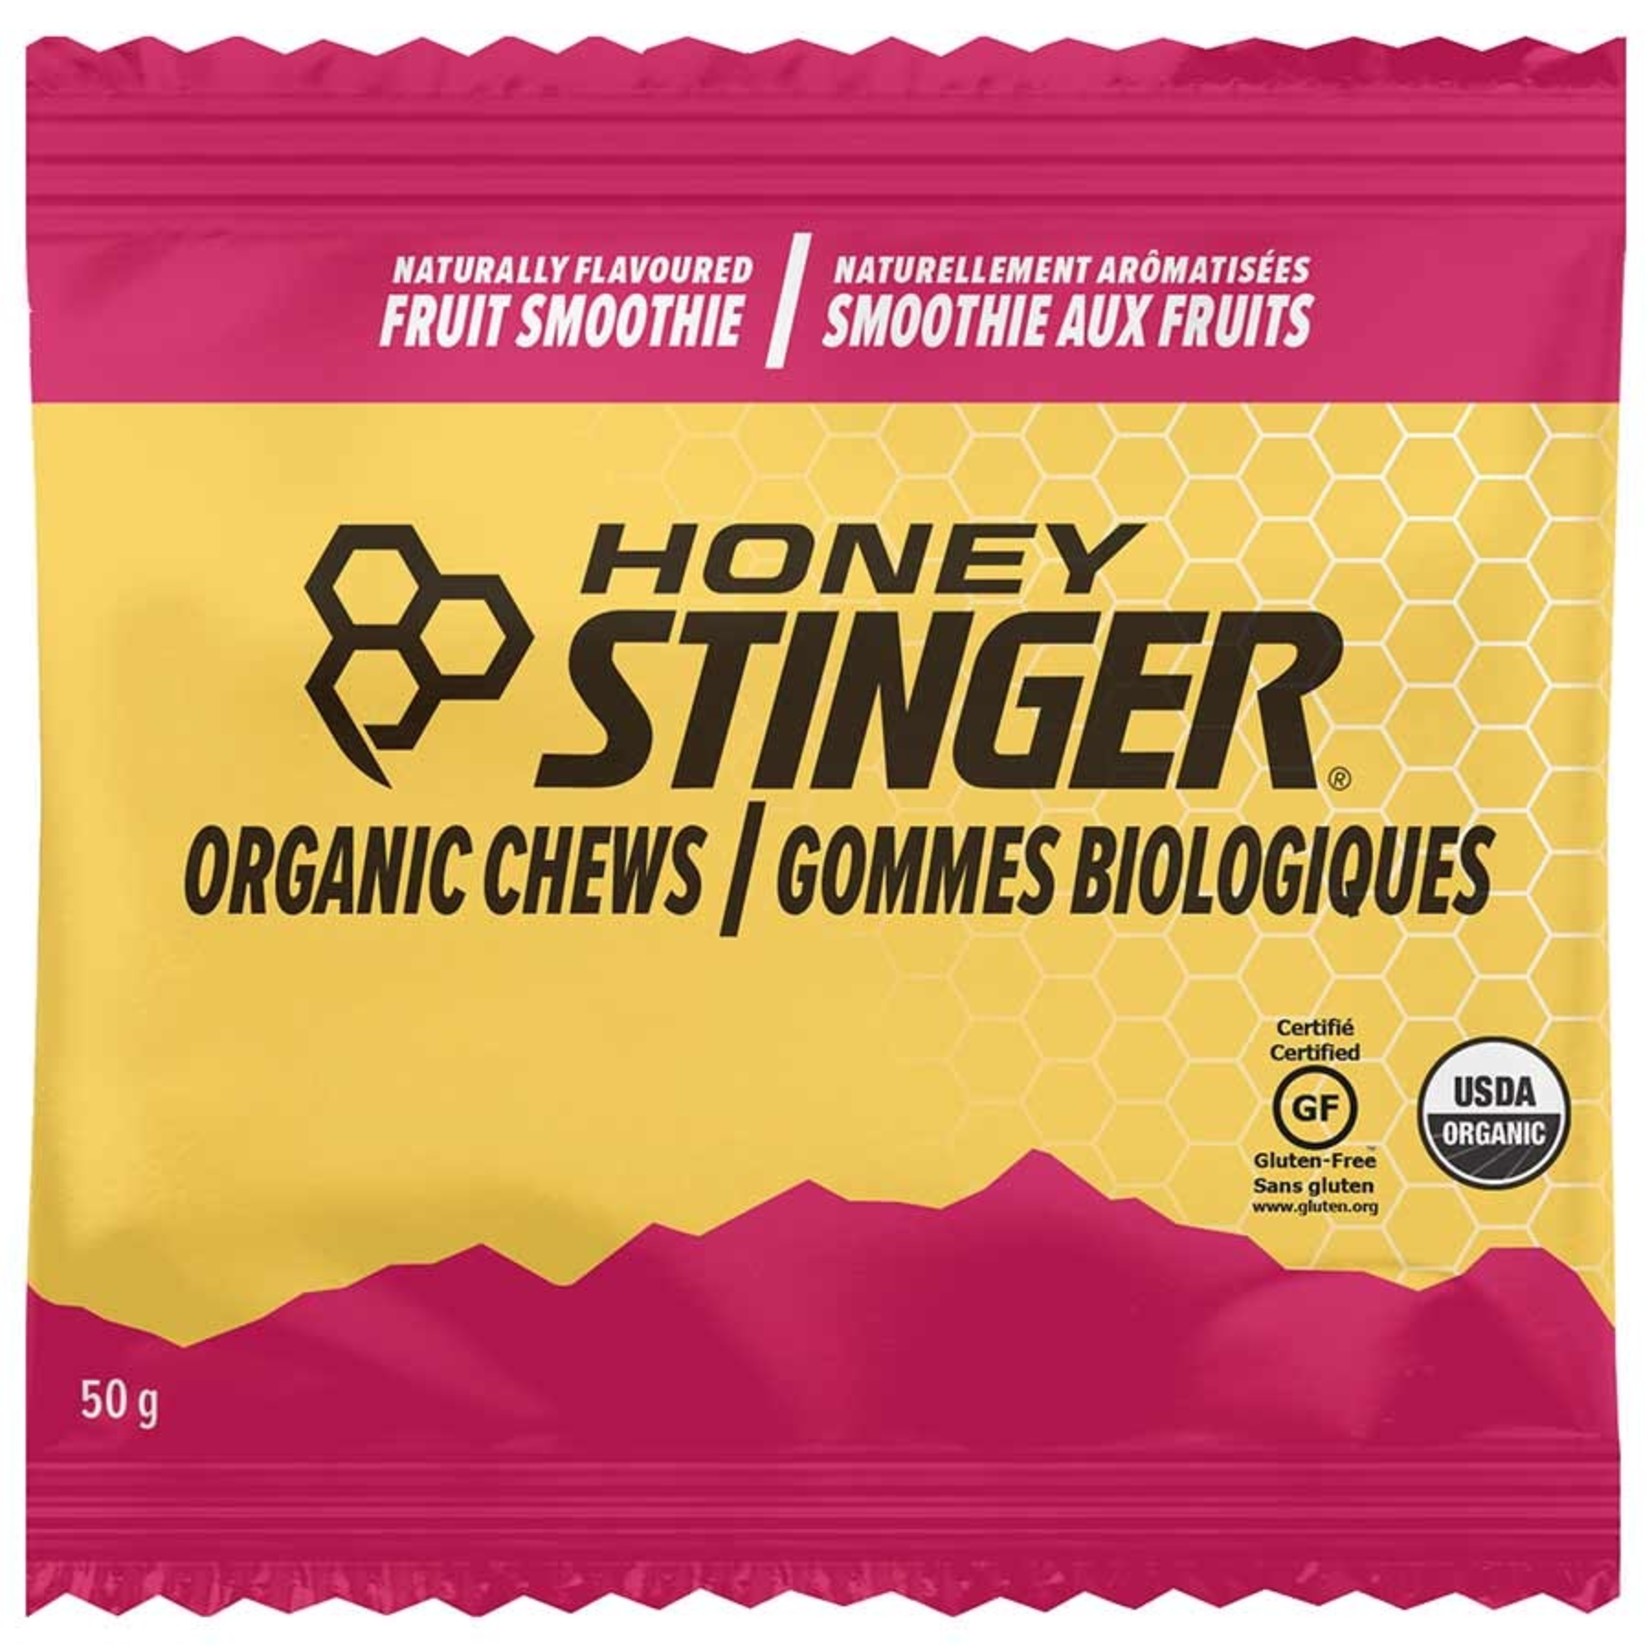 HONEY STINGER Honey Stinger Organic Chews 50g